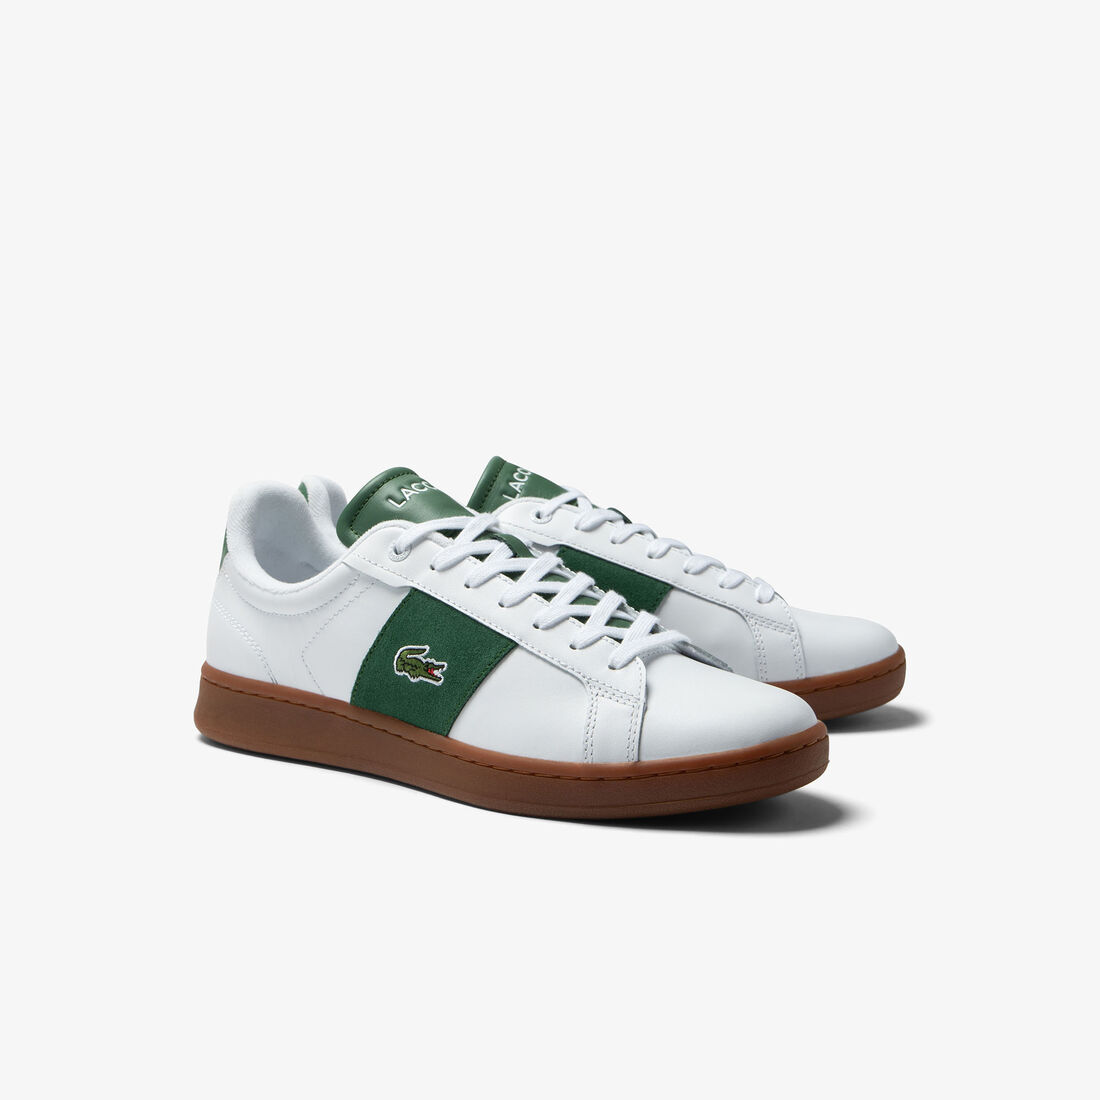 Lacoste Carnaby Pro Leder Colour Pop Sneakers Herren Weiß | YQLD-71829